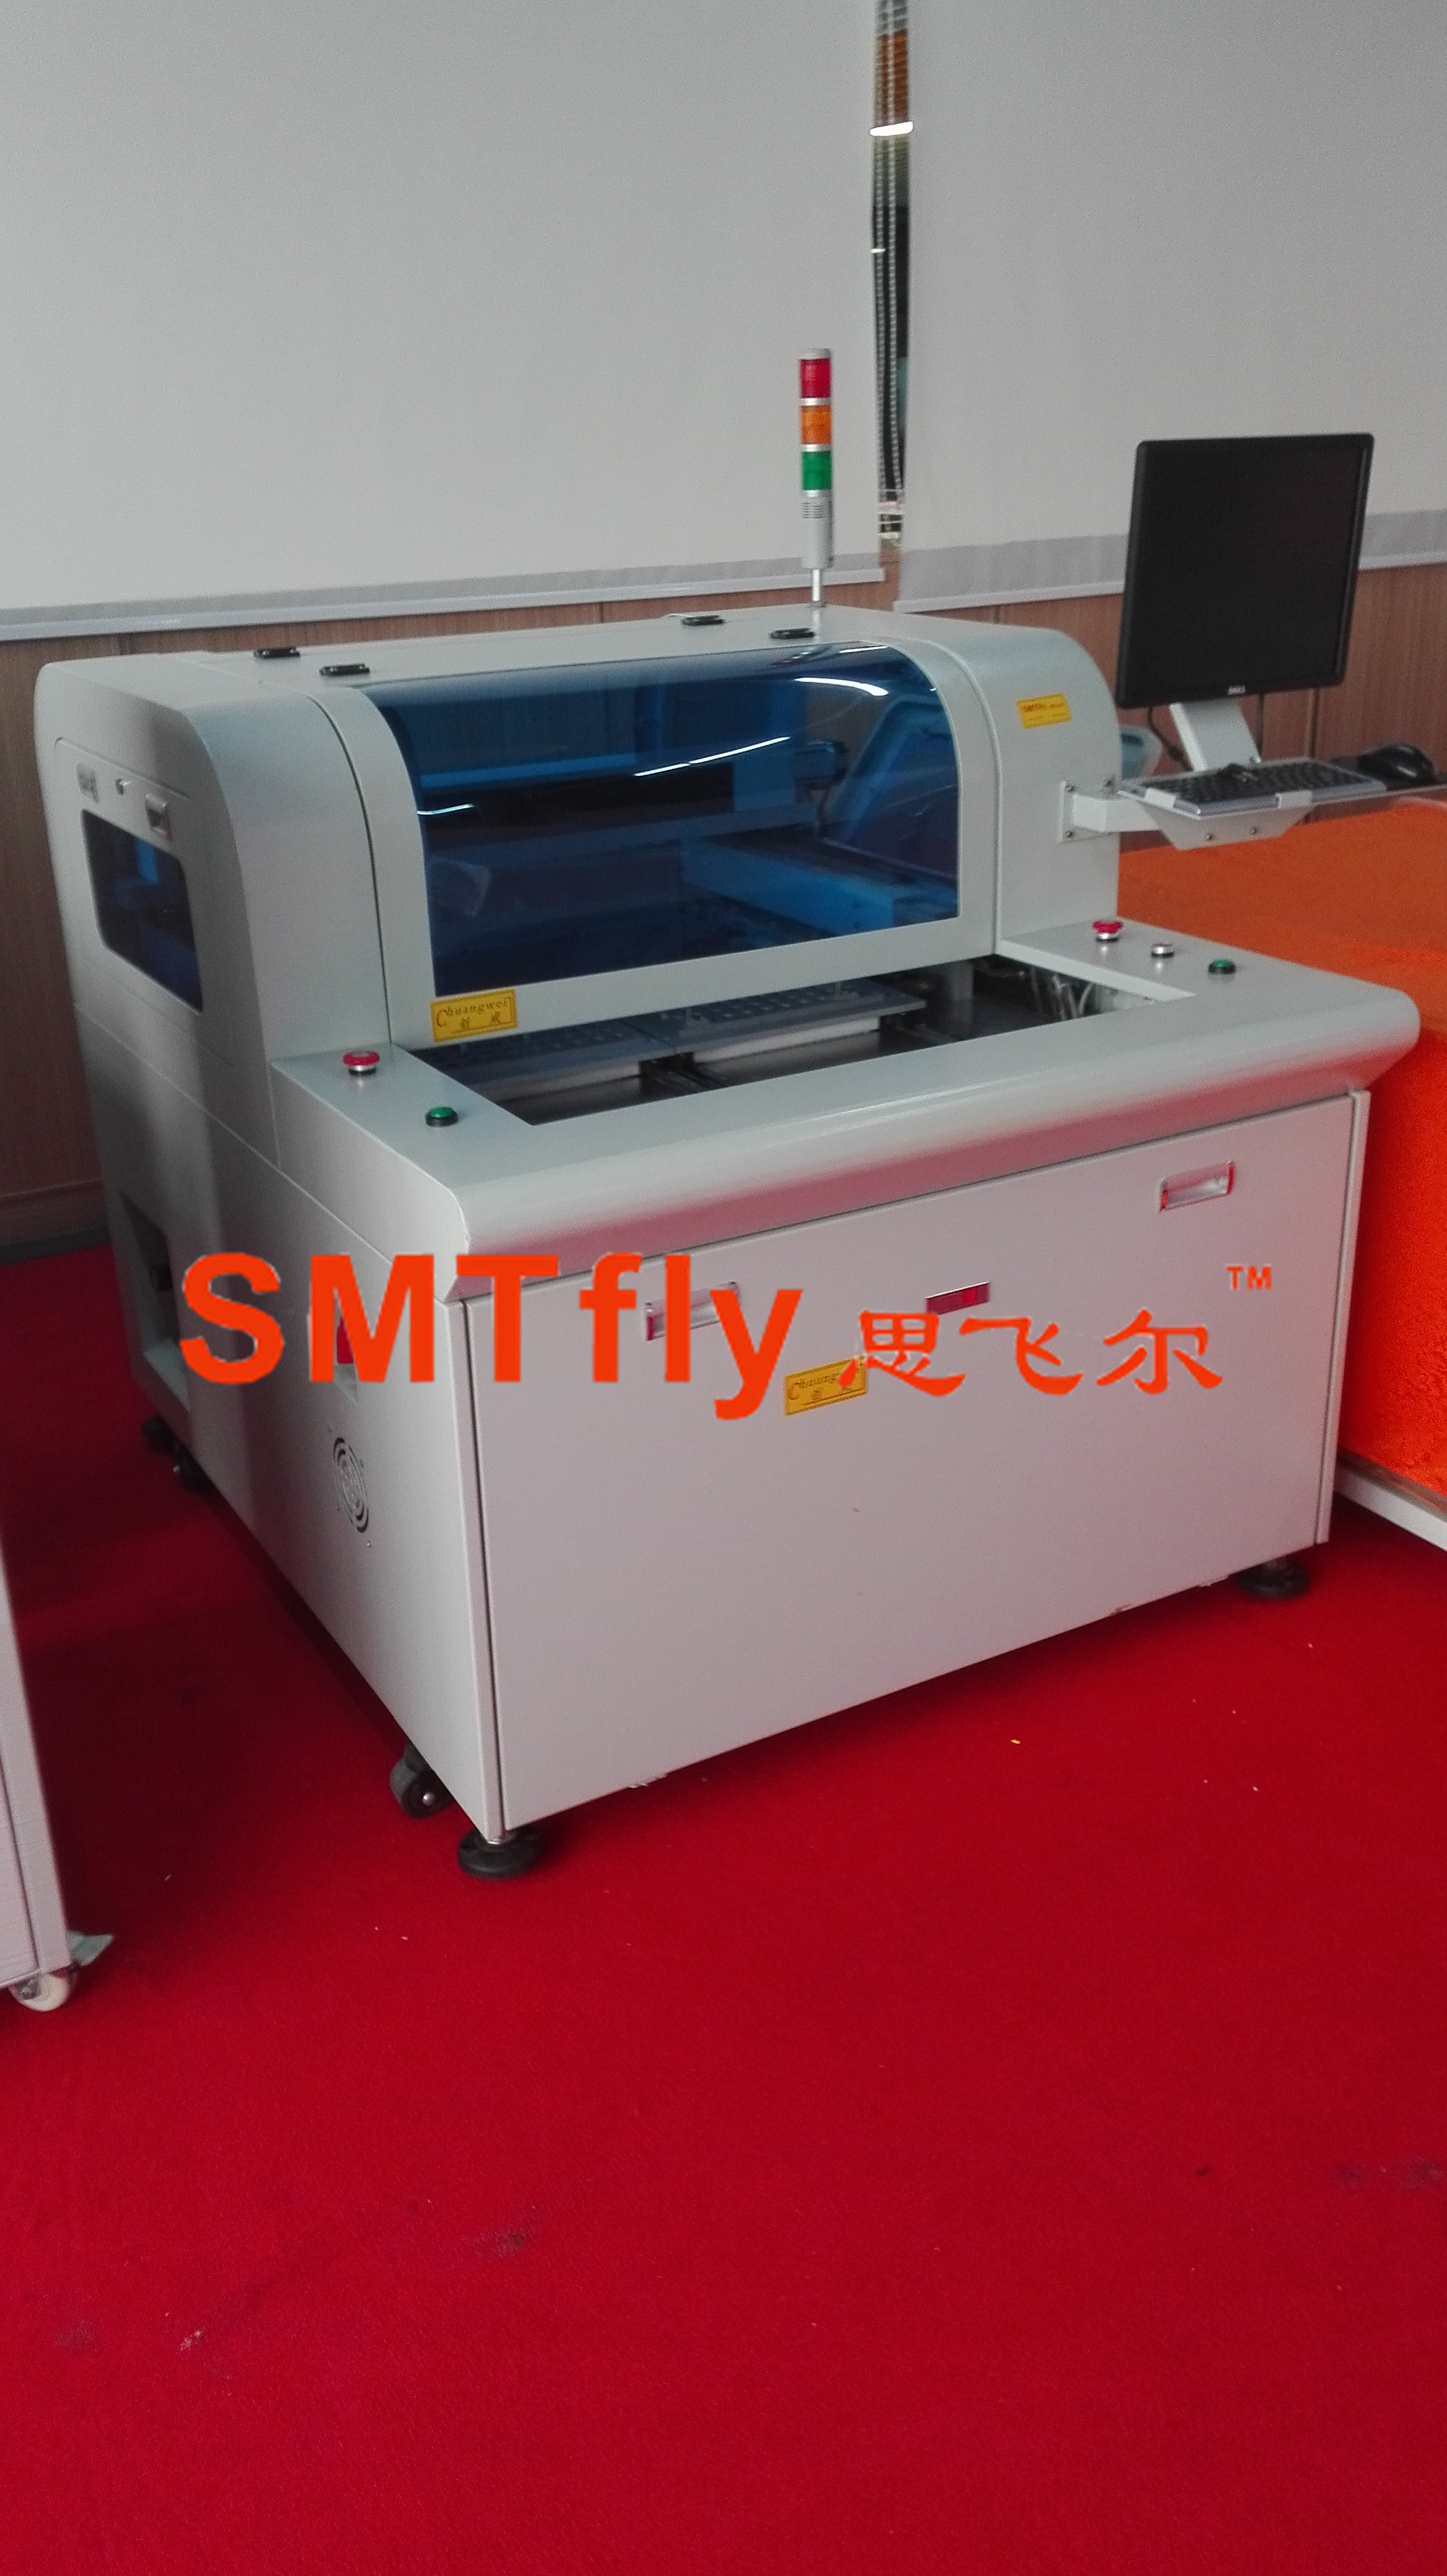 Printed Circuit Board Milling Machine,SMTfly-F01